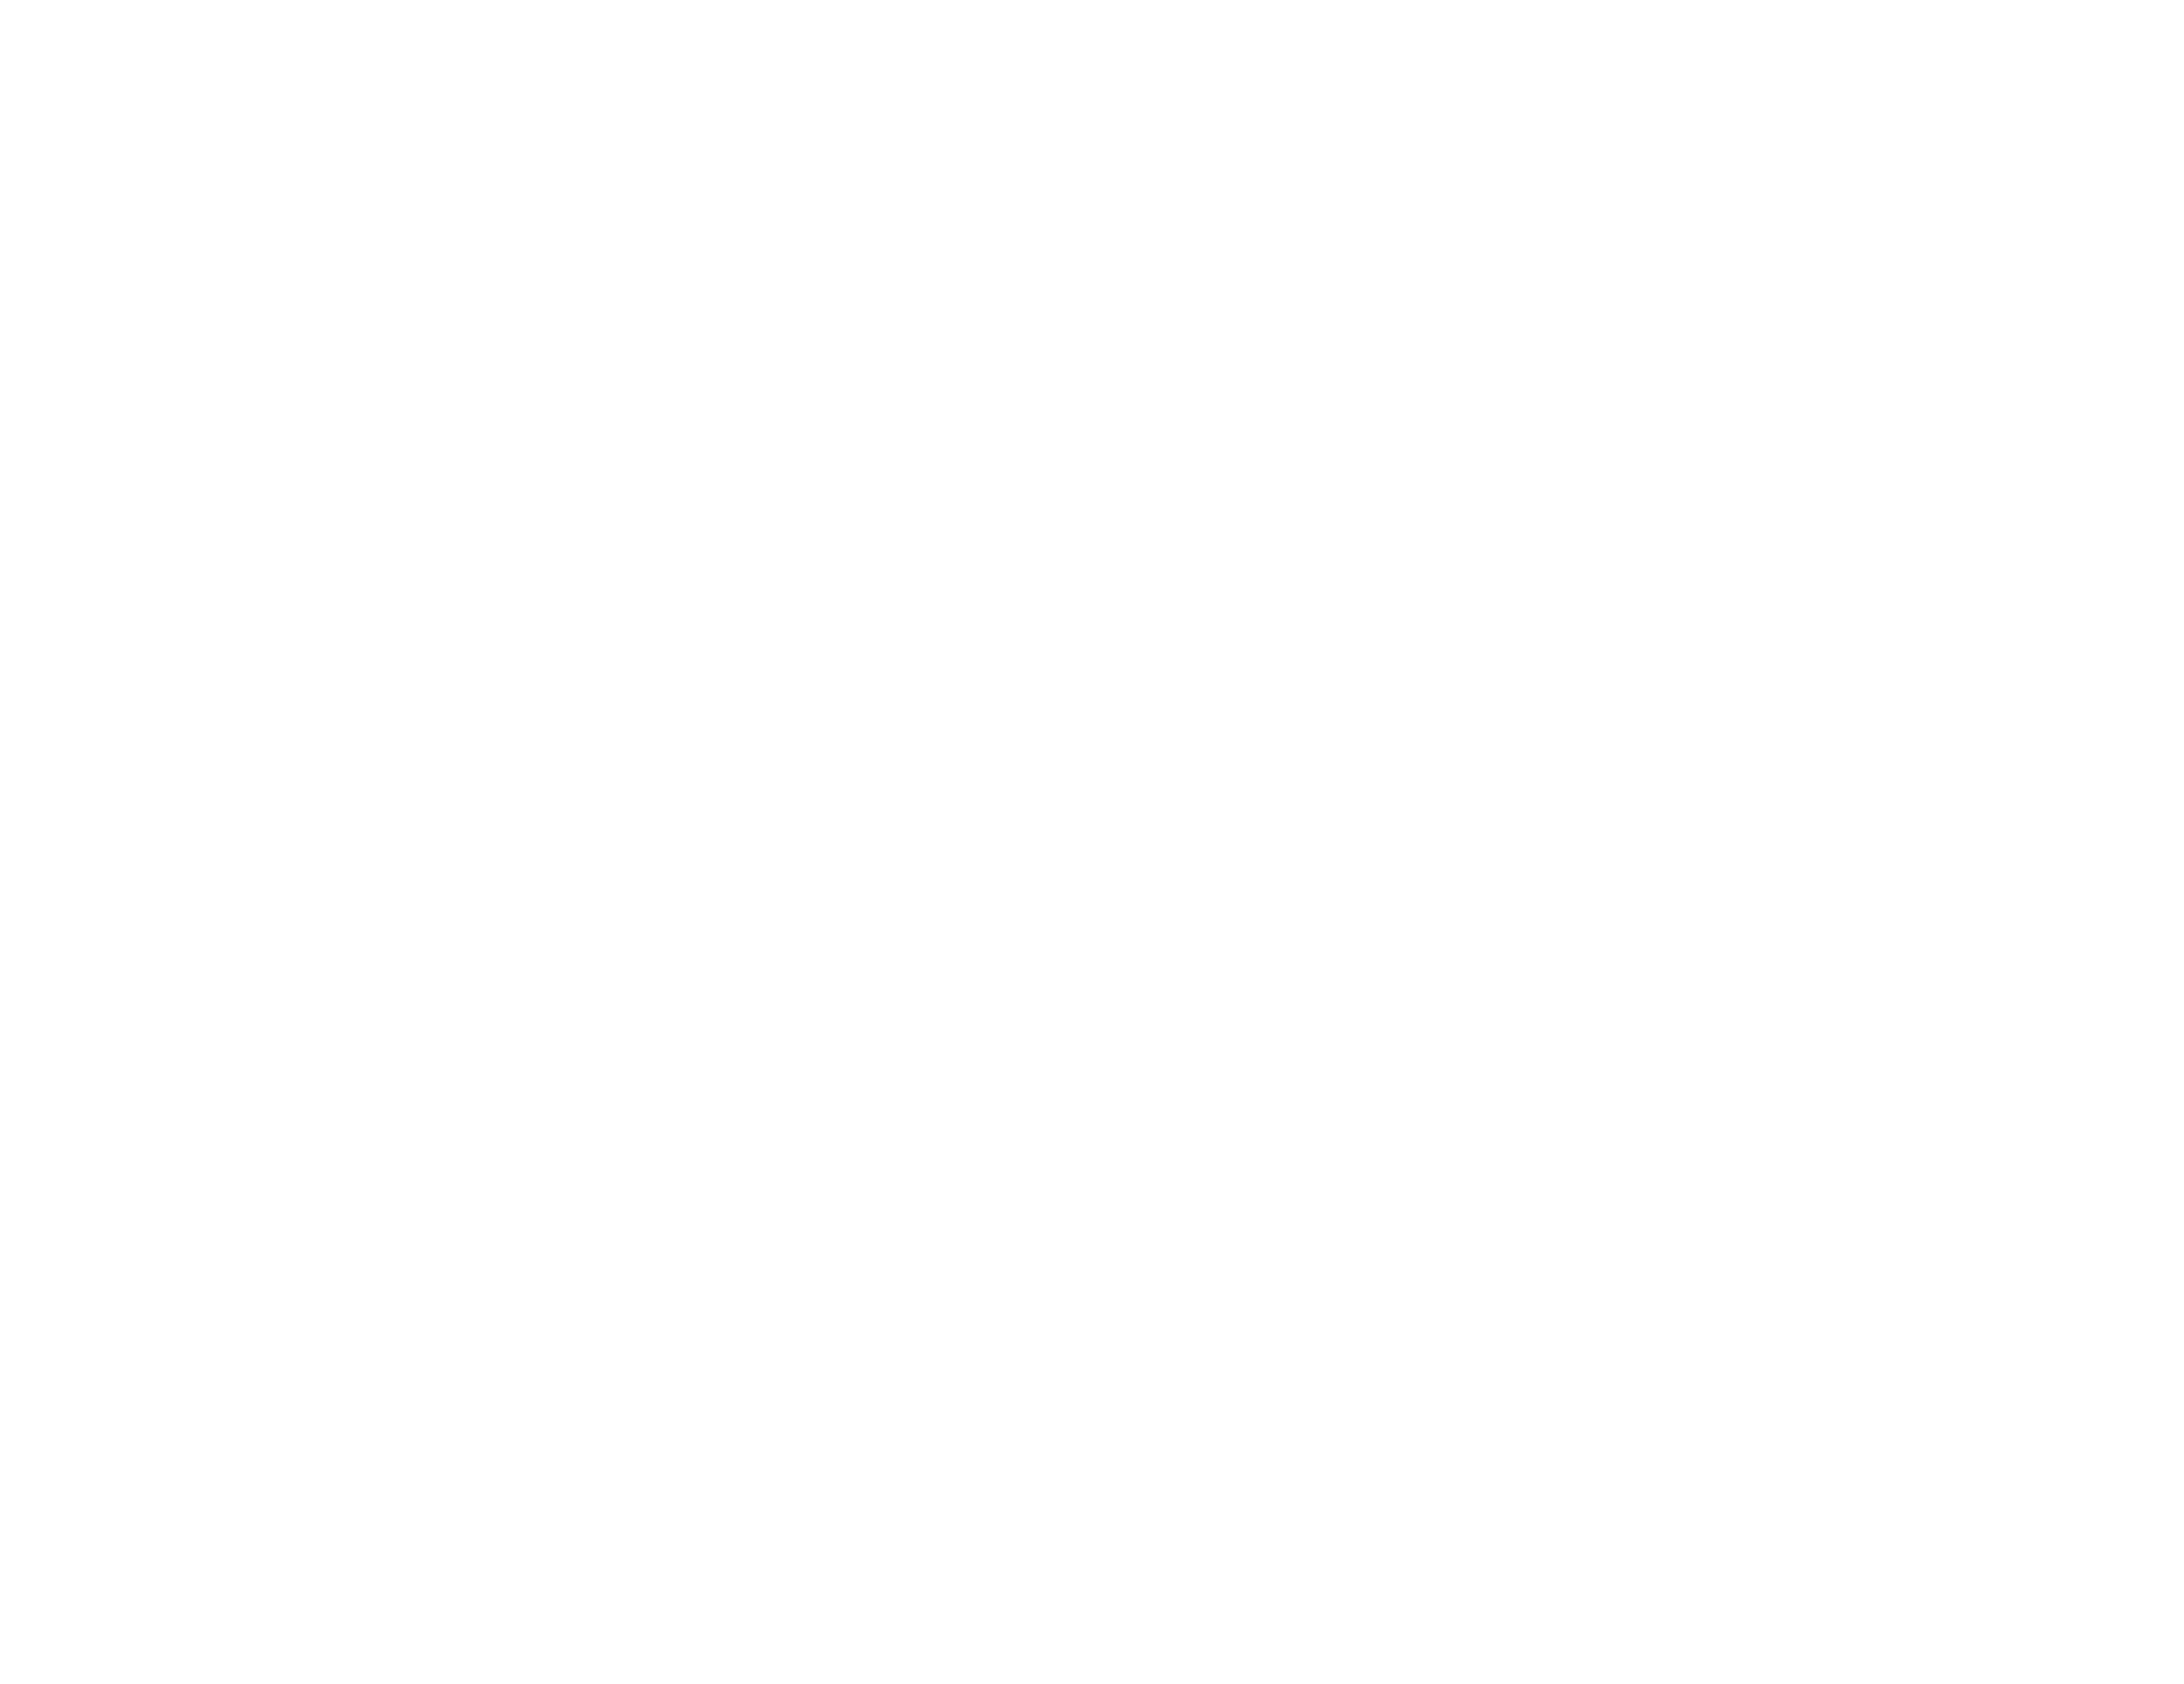 World Forum officially a Healthy Venue